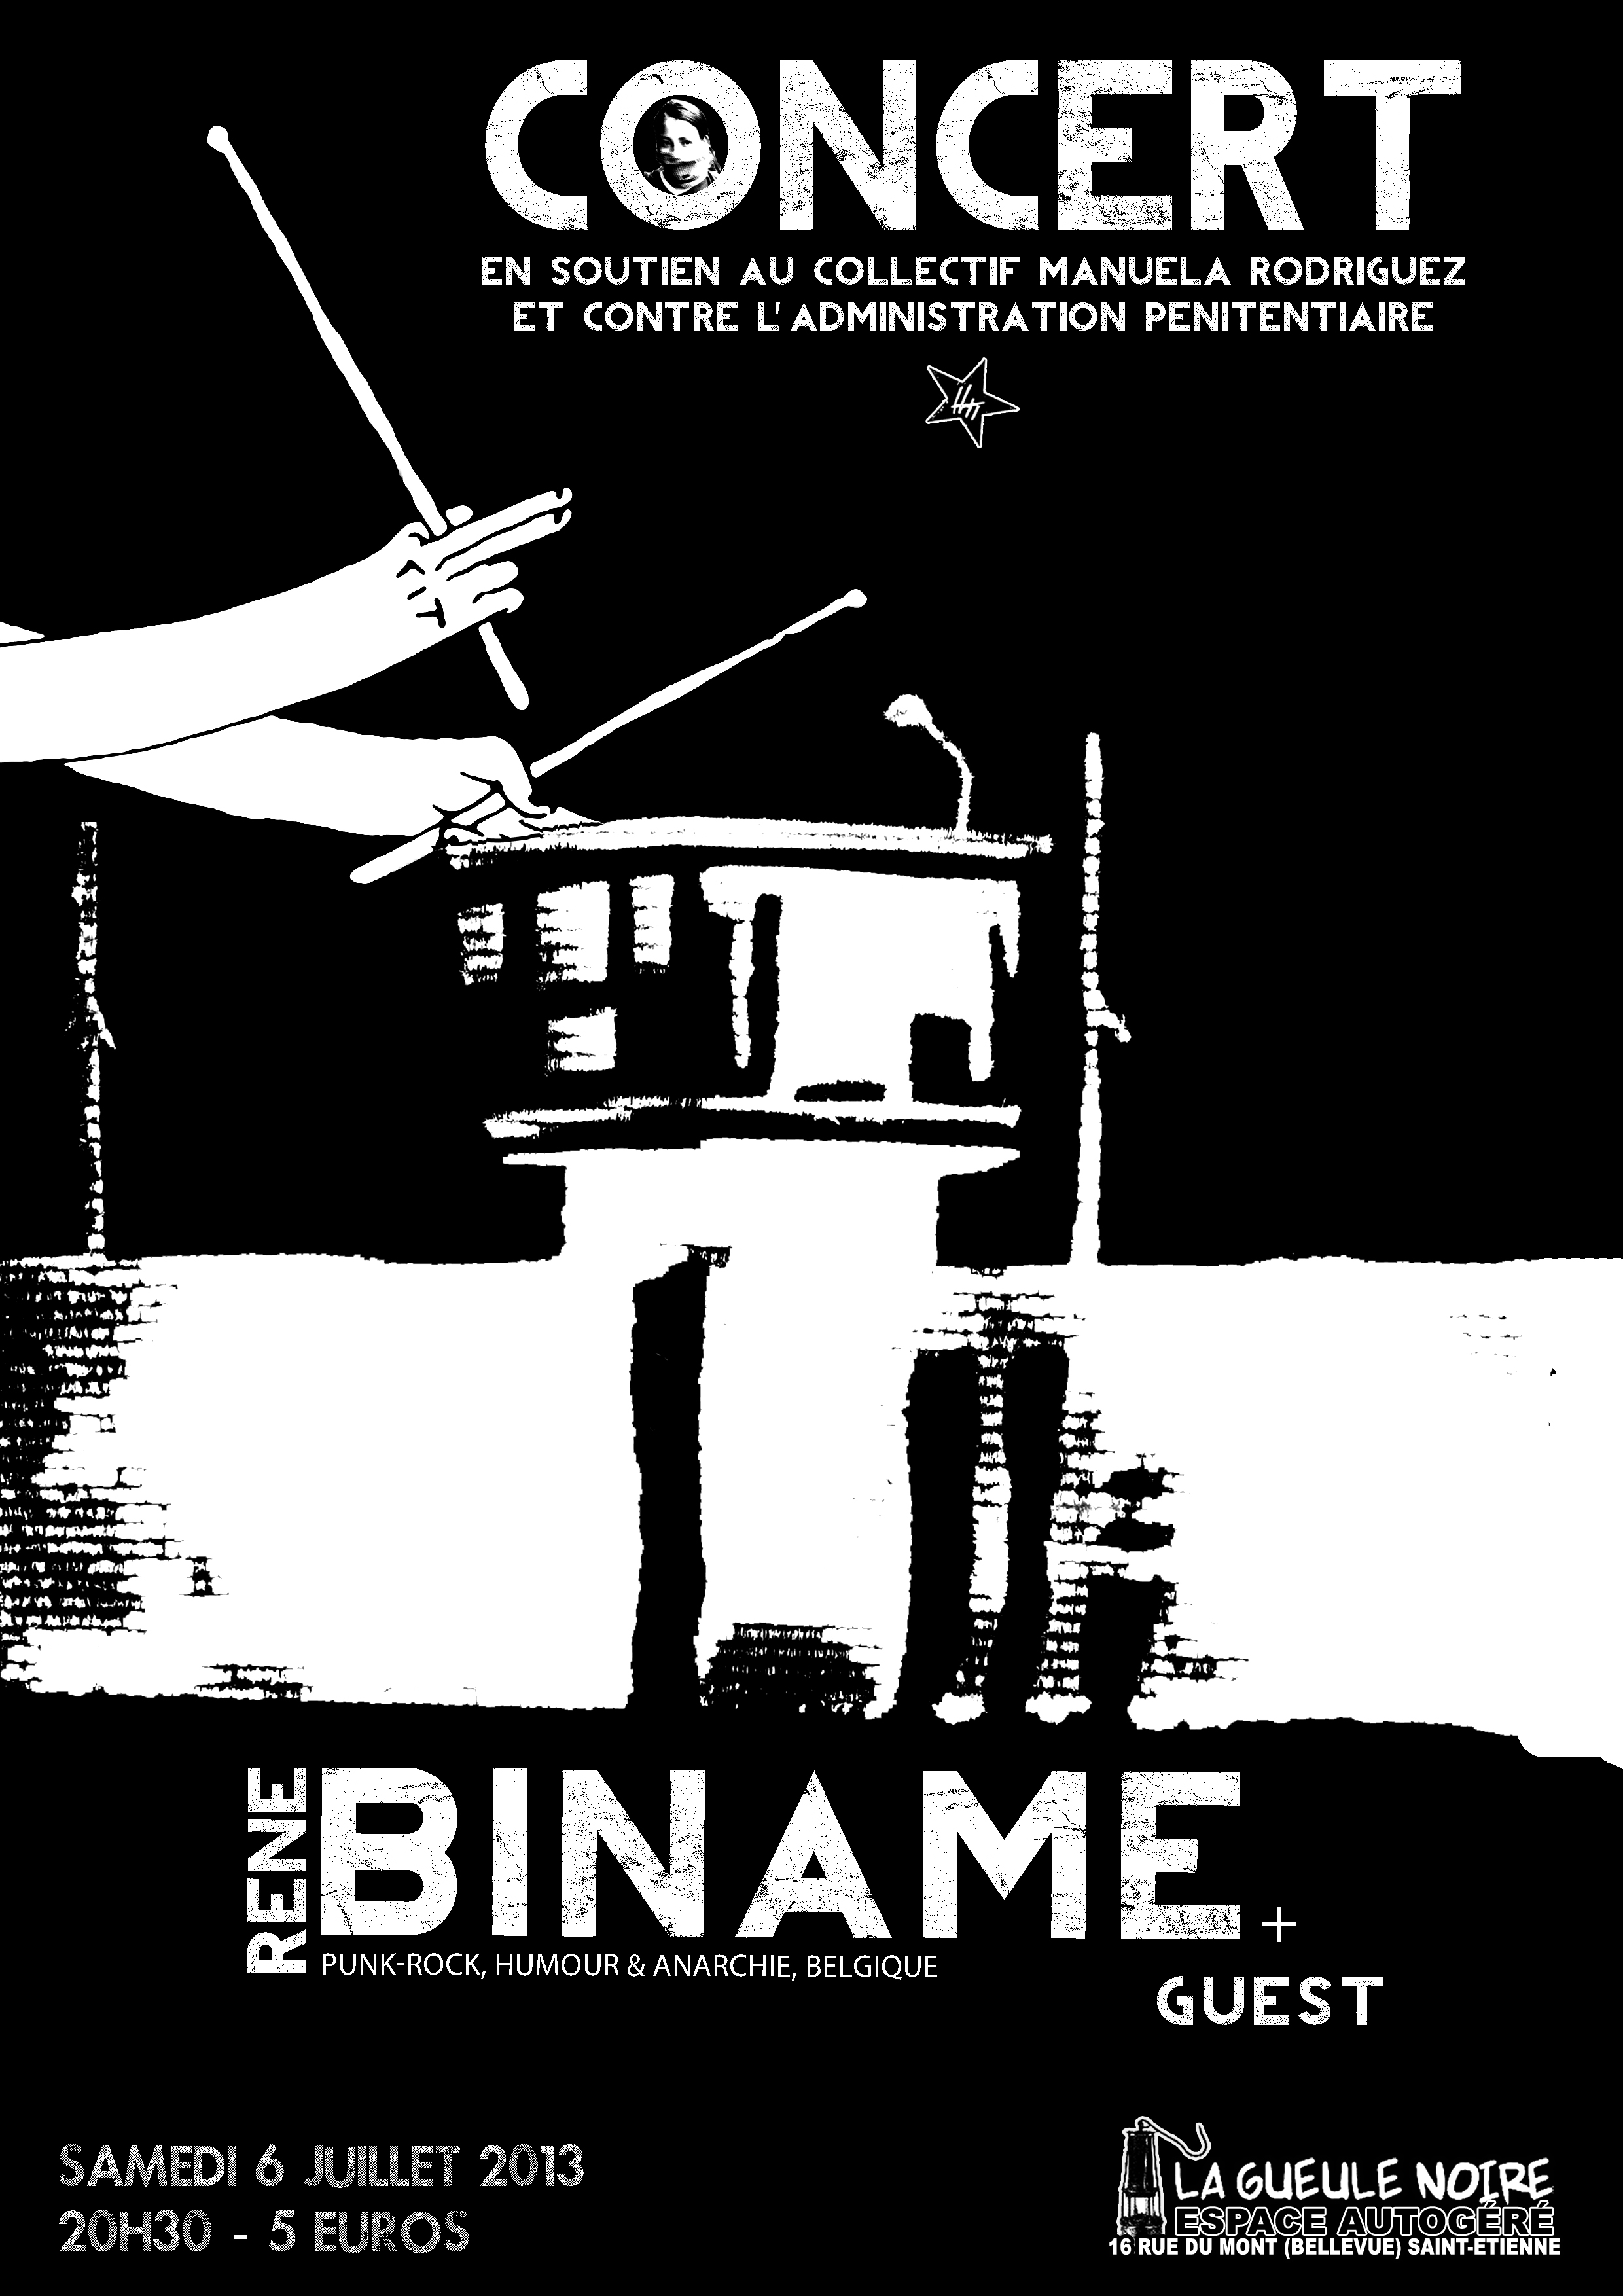 Concert Biname - 6 juillet 2013 - Saint Etienne